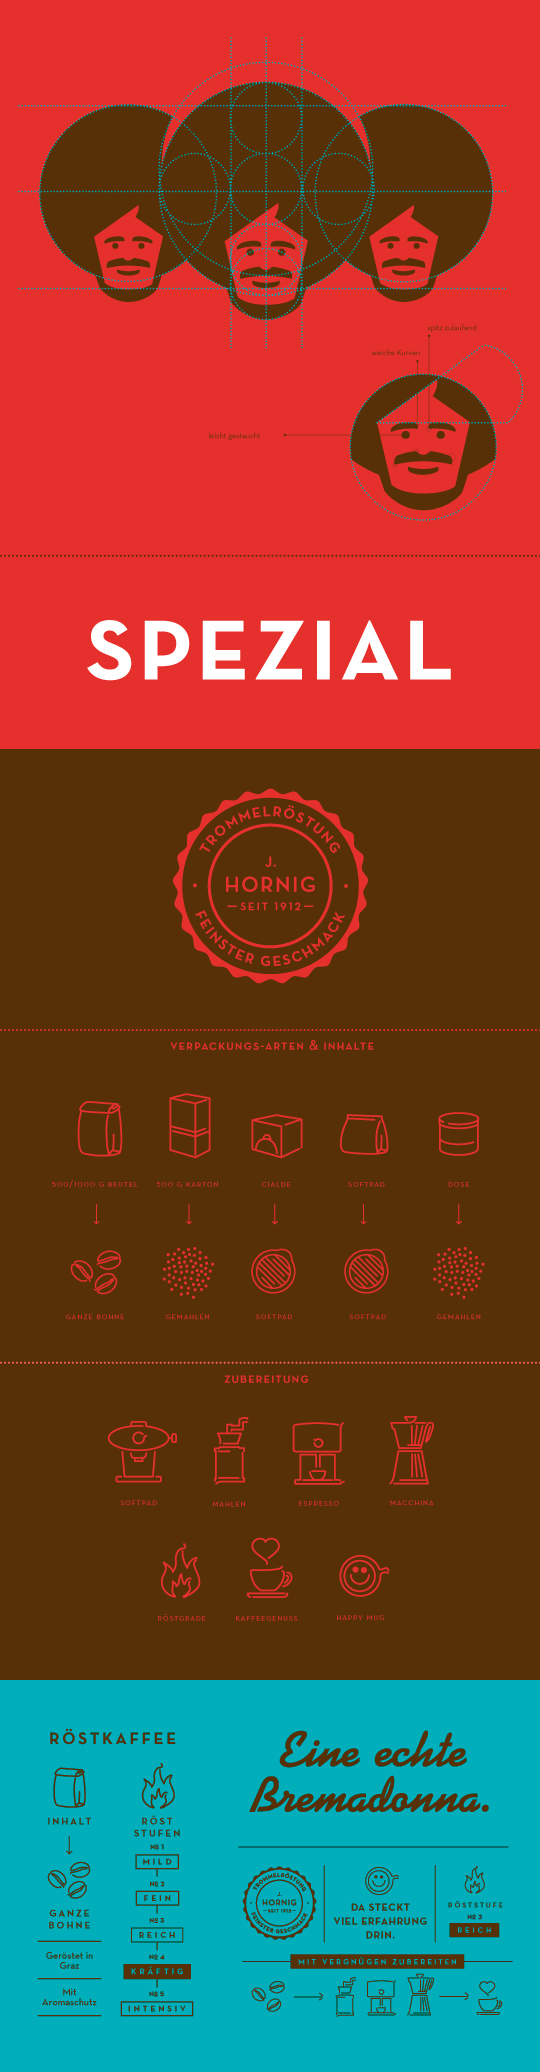 Coffee J. Hornig Corporate Design Corporate Identity Logo Design